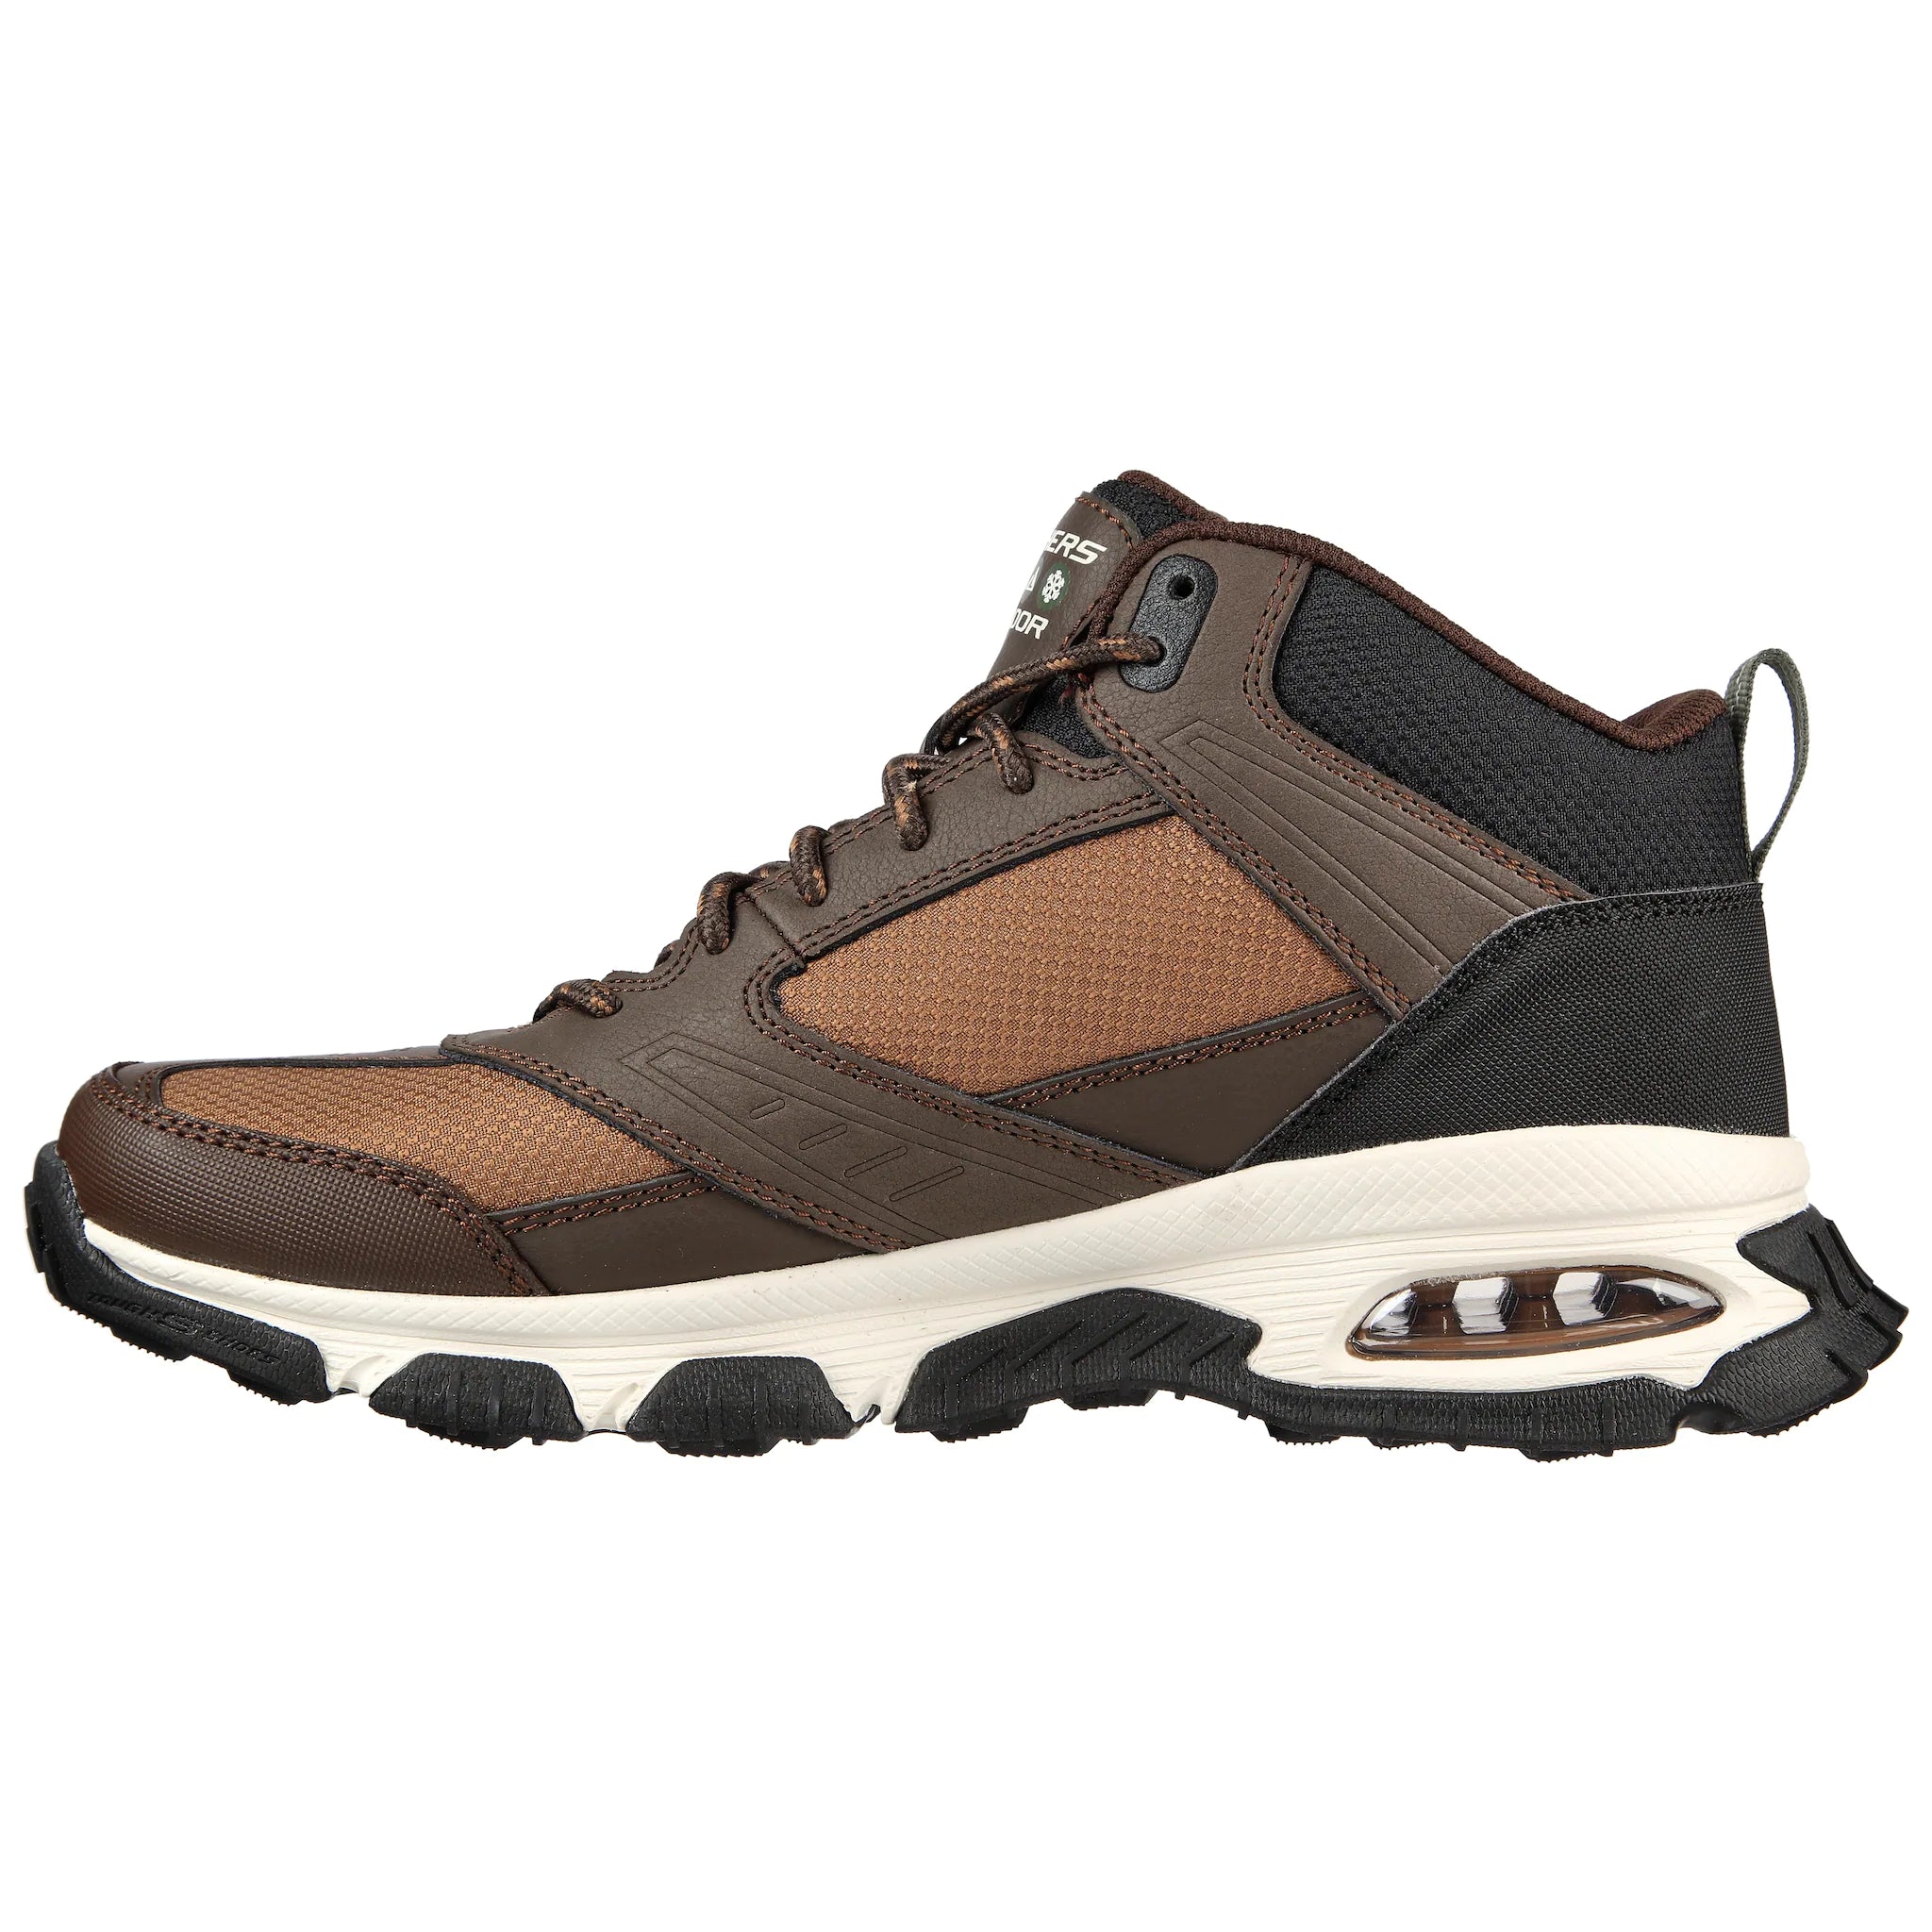 Bulldozer - shoe&amp;me - Skechers - Boot - Boots, Mens, Winter